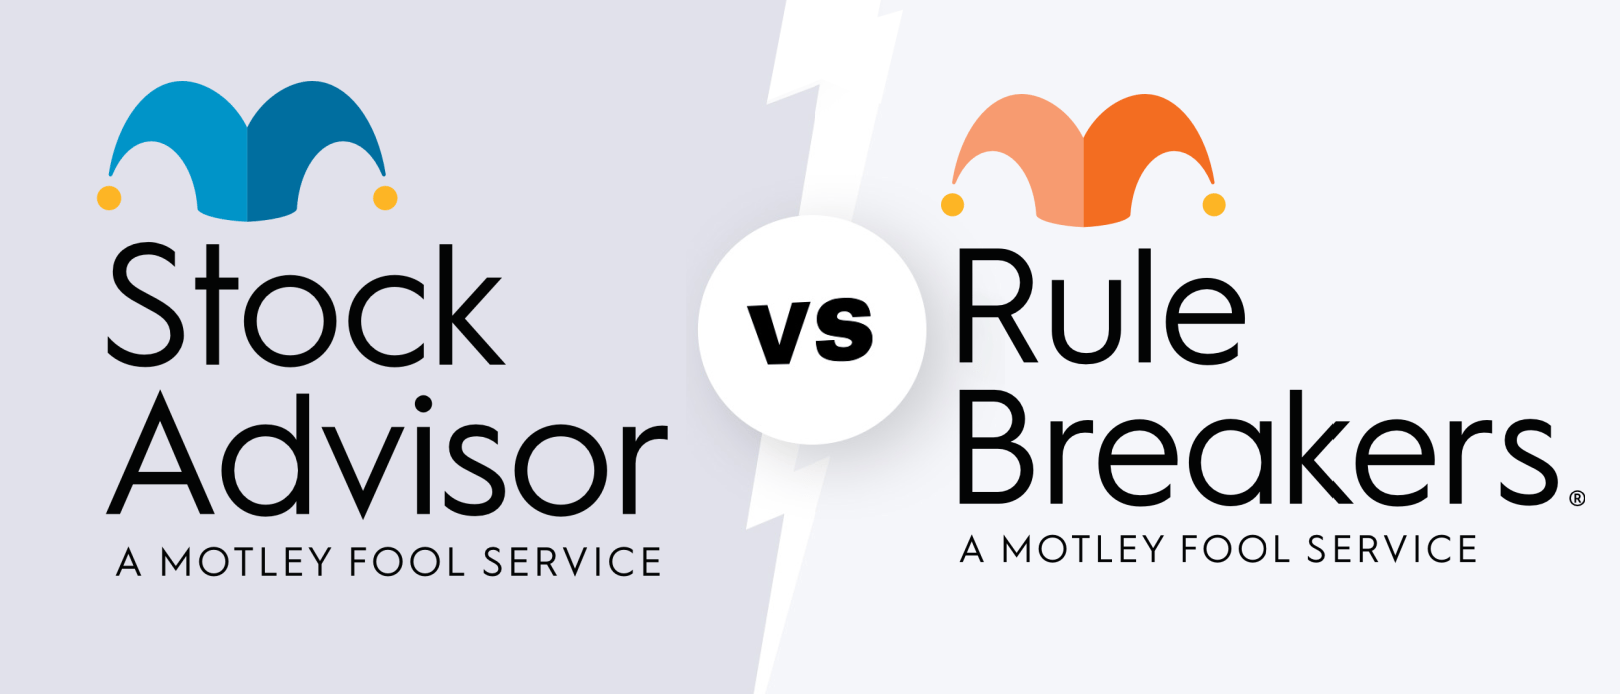 Motley Fool Stock Advisor vs. Rule Breakers